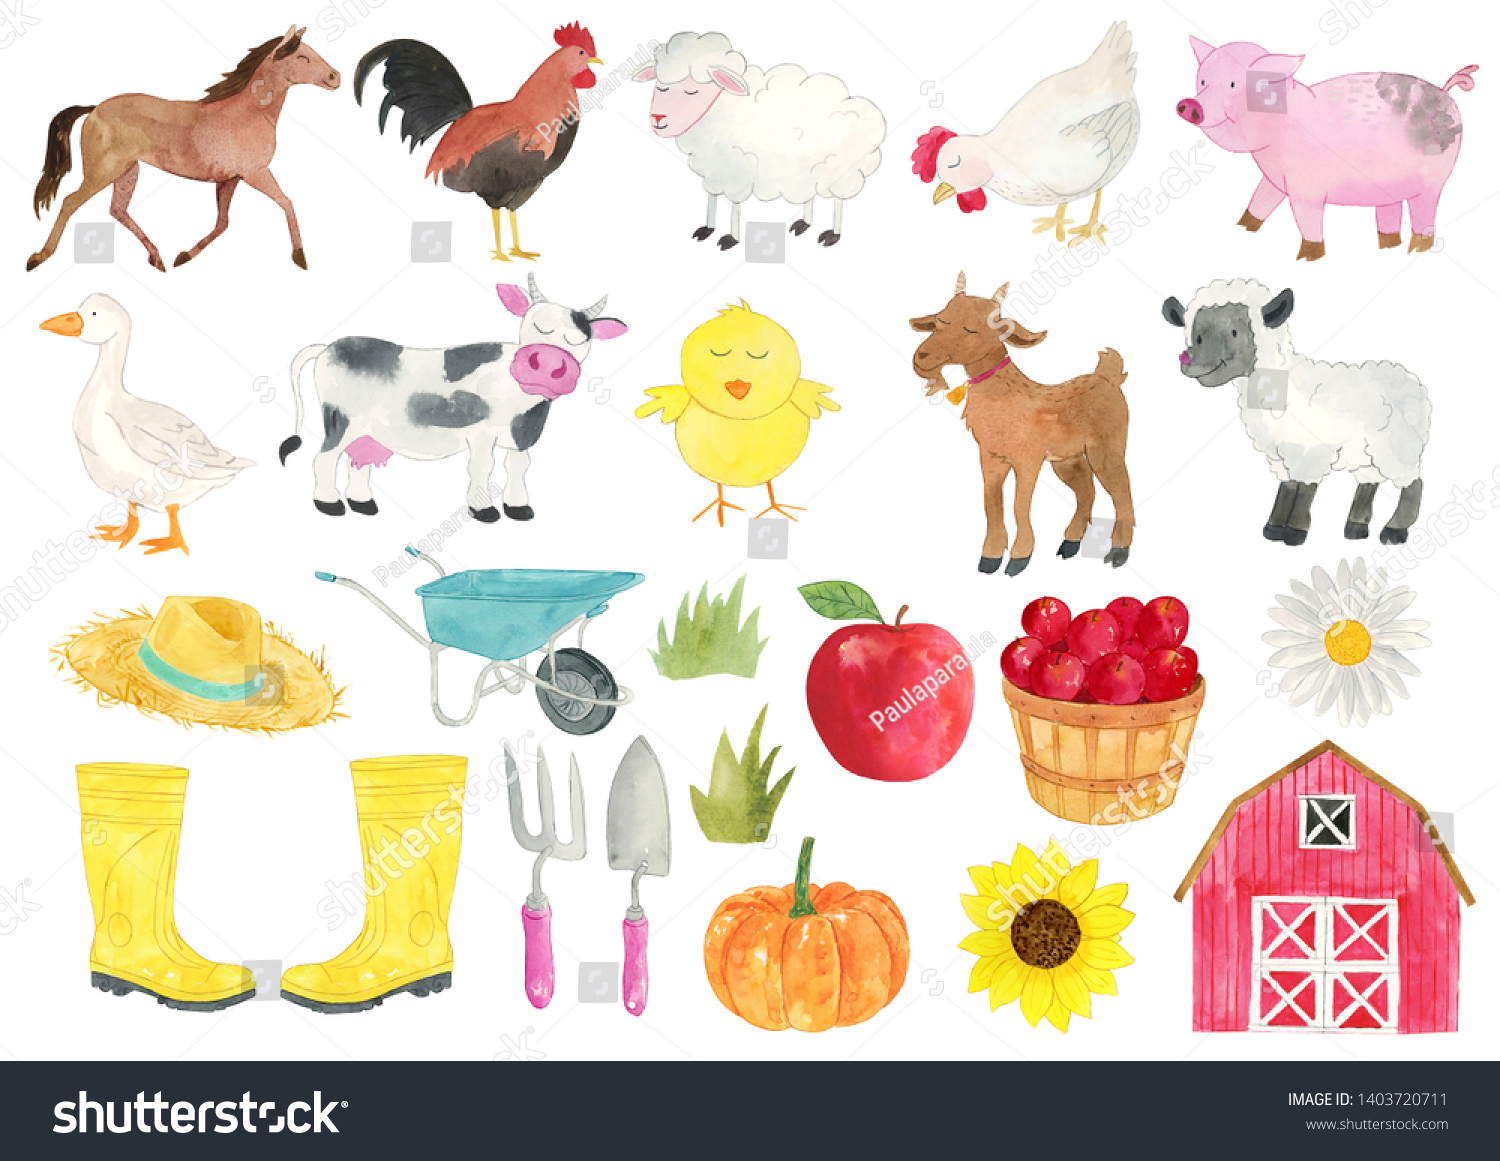 Download Watercolor Farm Animals Illustration Farm Animals Stock Illustration 1403720711